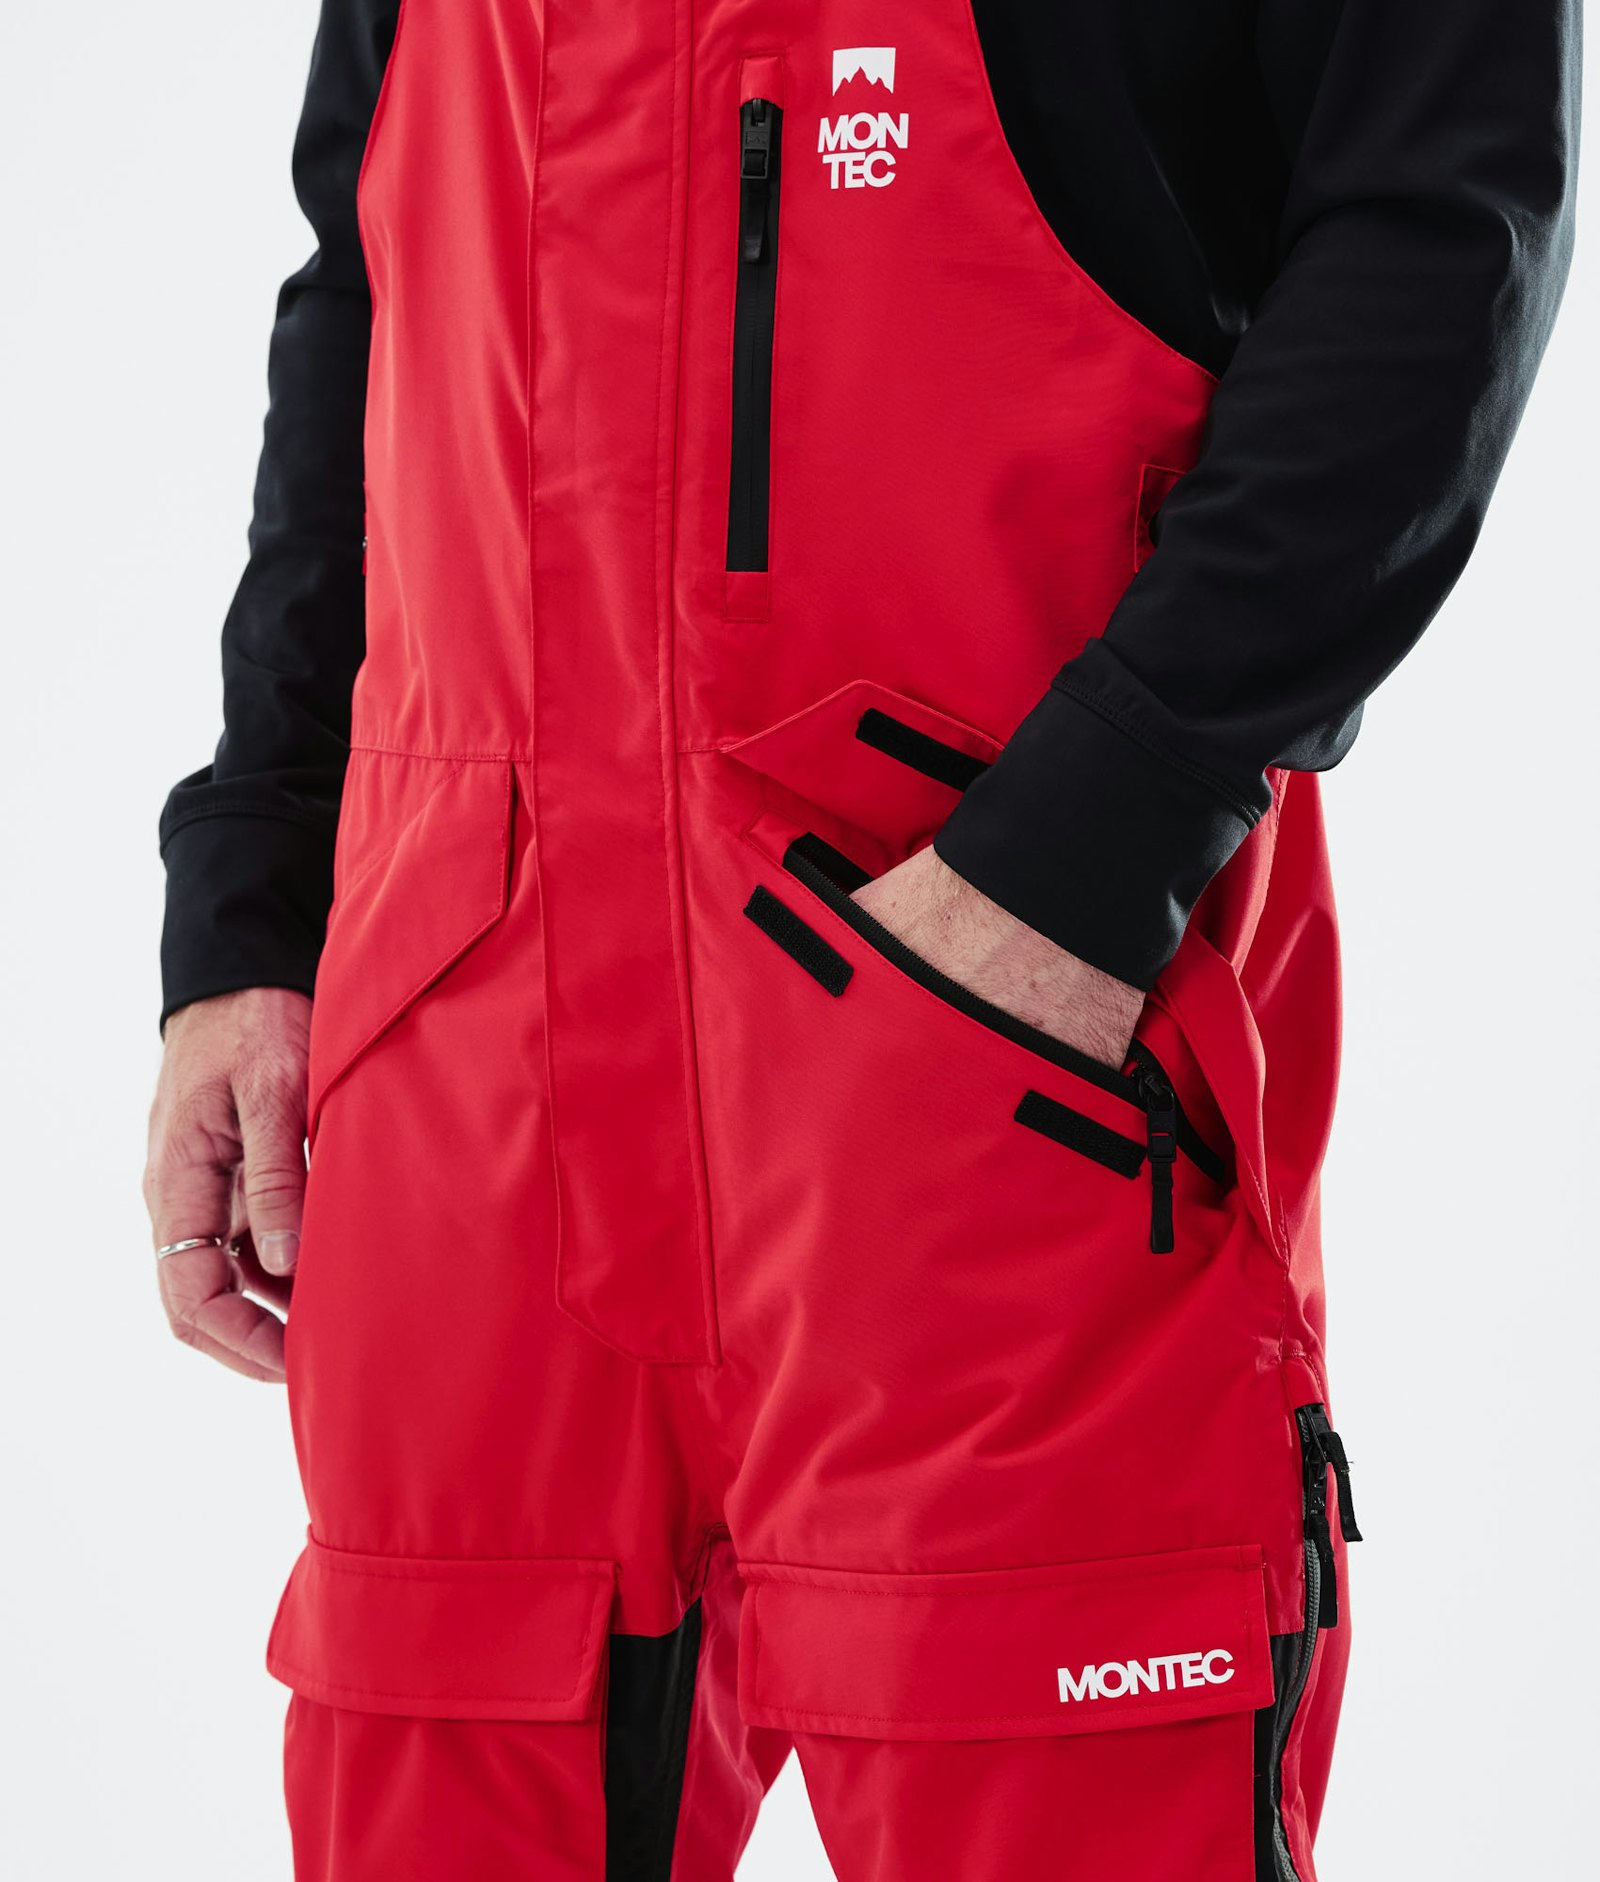 Fawk 2021 Ski Pants Men Red/Black, Image 4 of 6